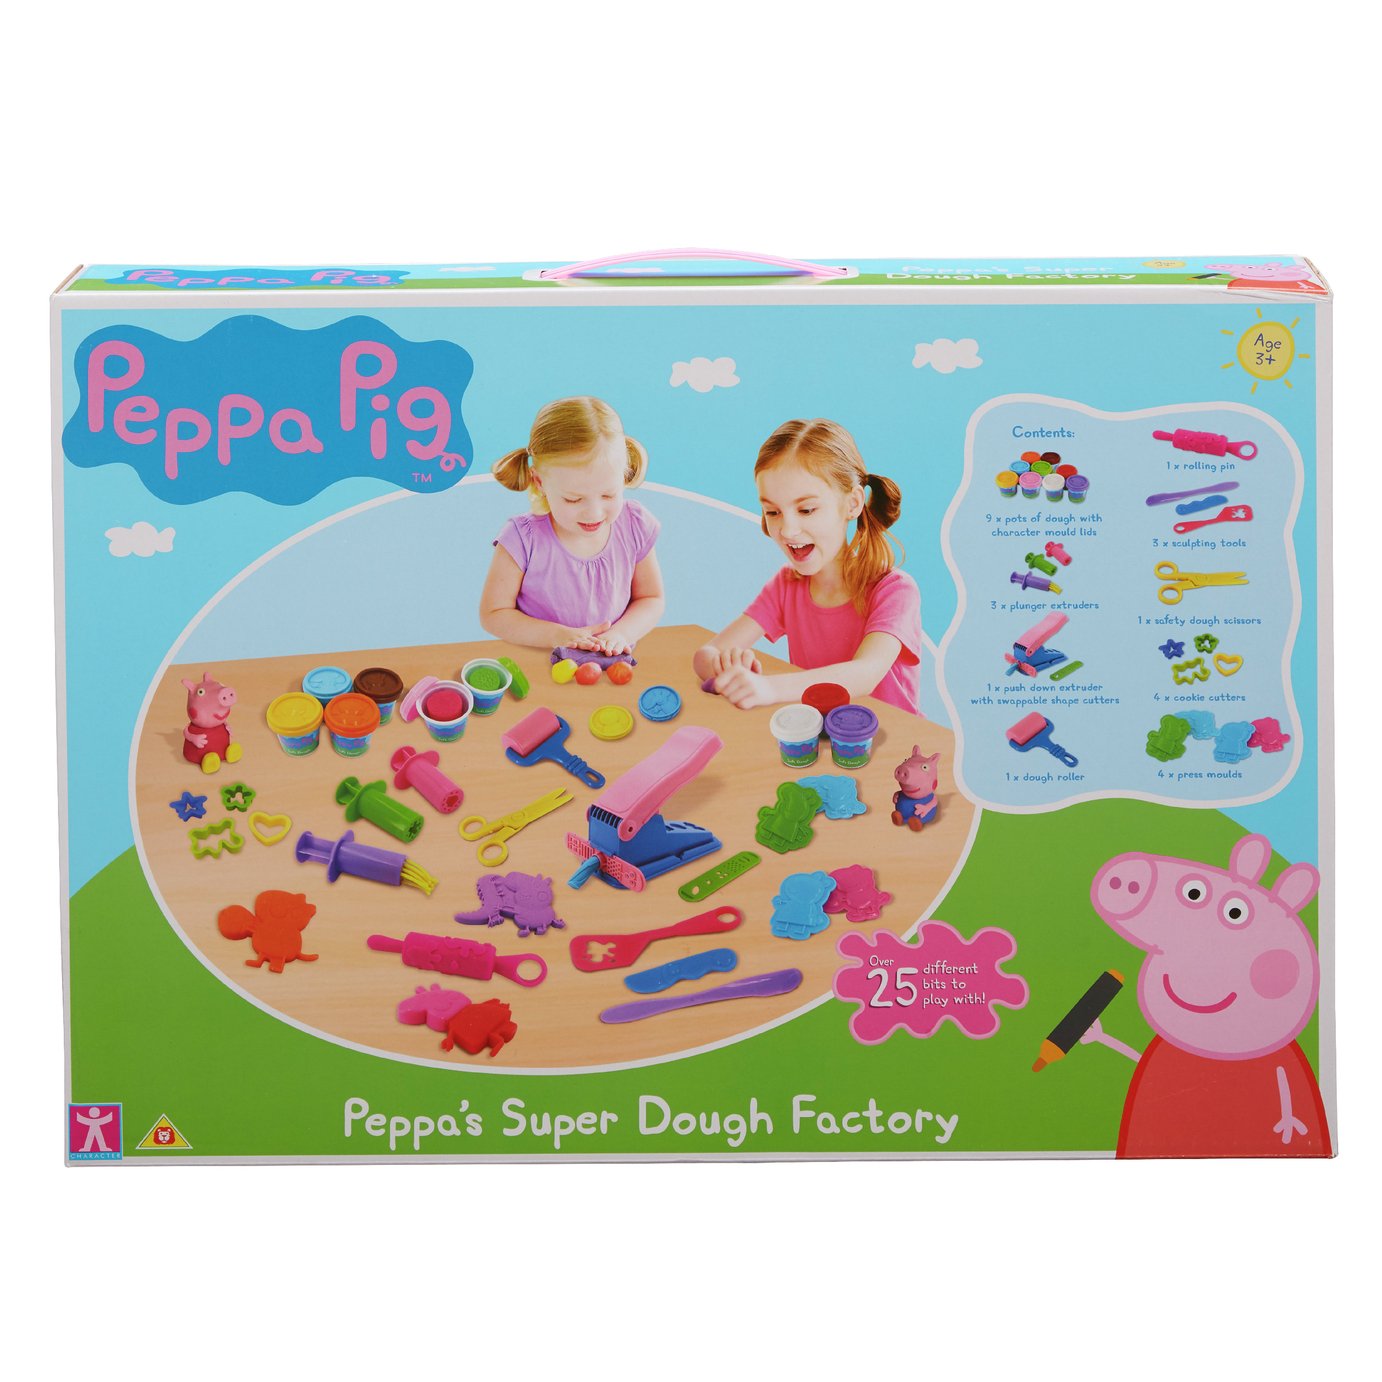 Peppa Pig Super Dough Factory Playset Review